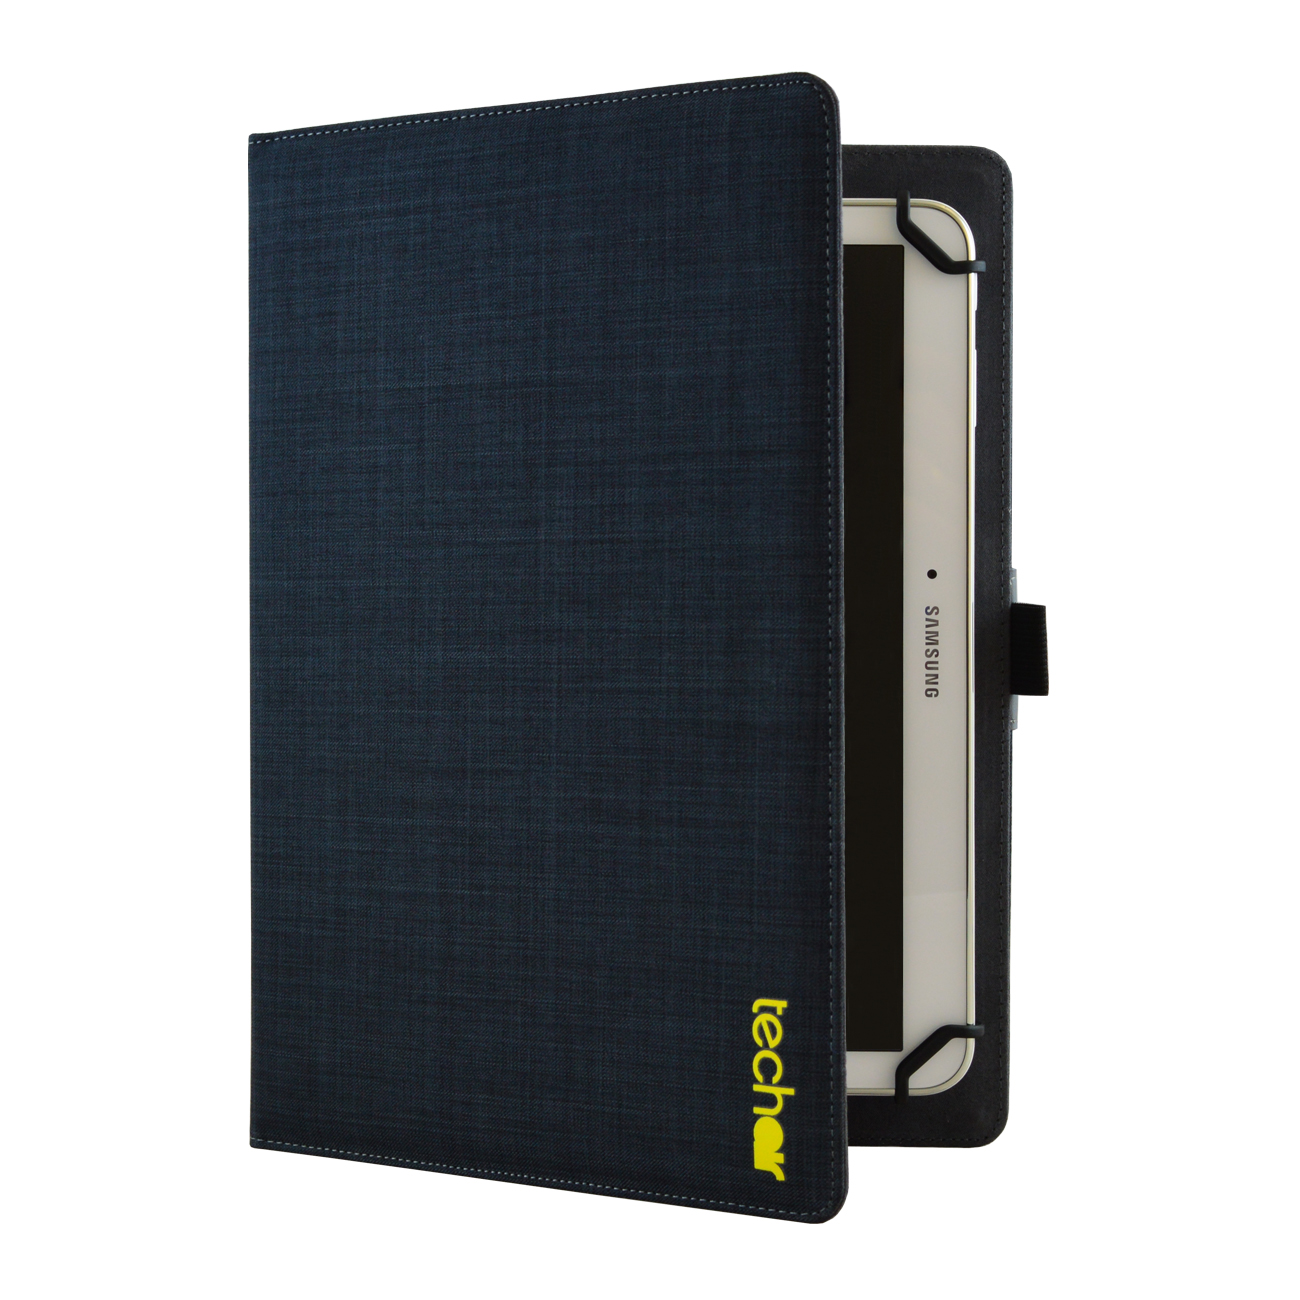 Tech Air 7 8 Inch Universal Tablet Case Black